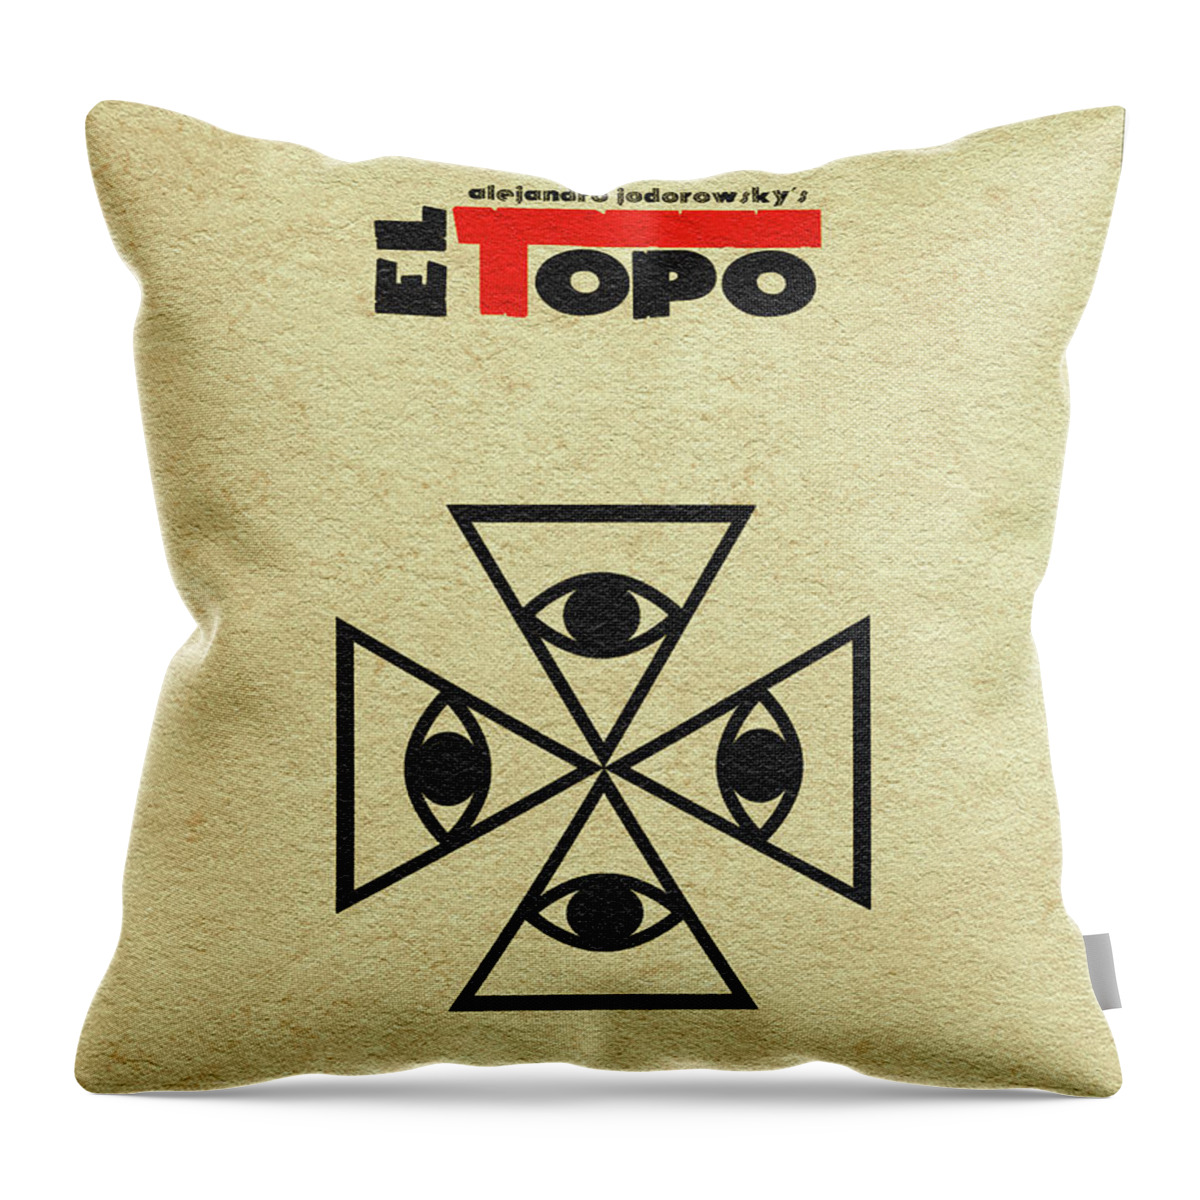 El Topo Throw Pillow featuring the digital art El Topo by Inspirowl Design